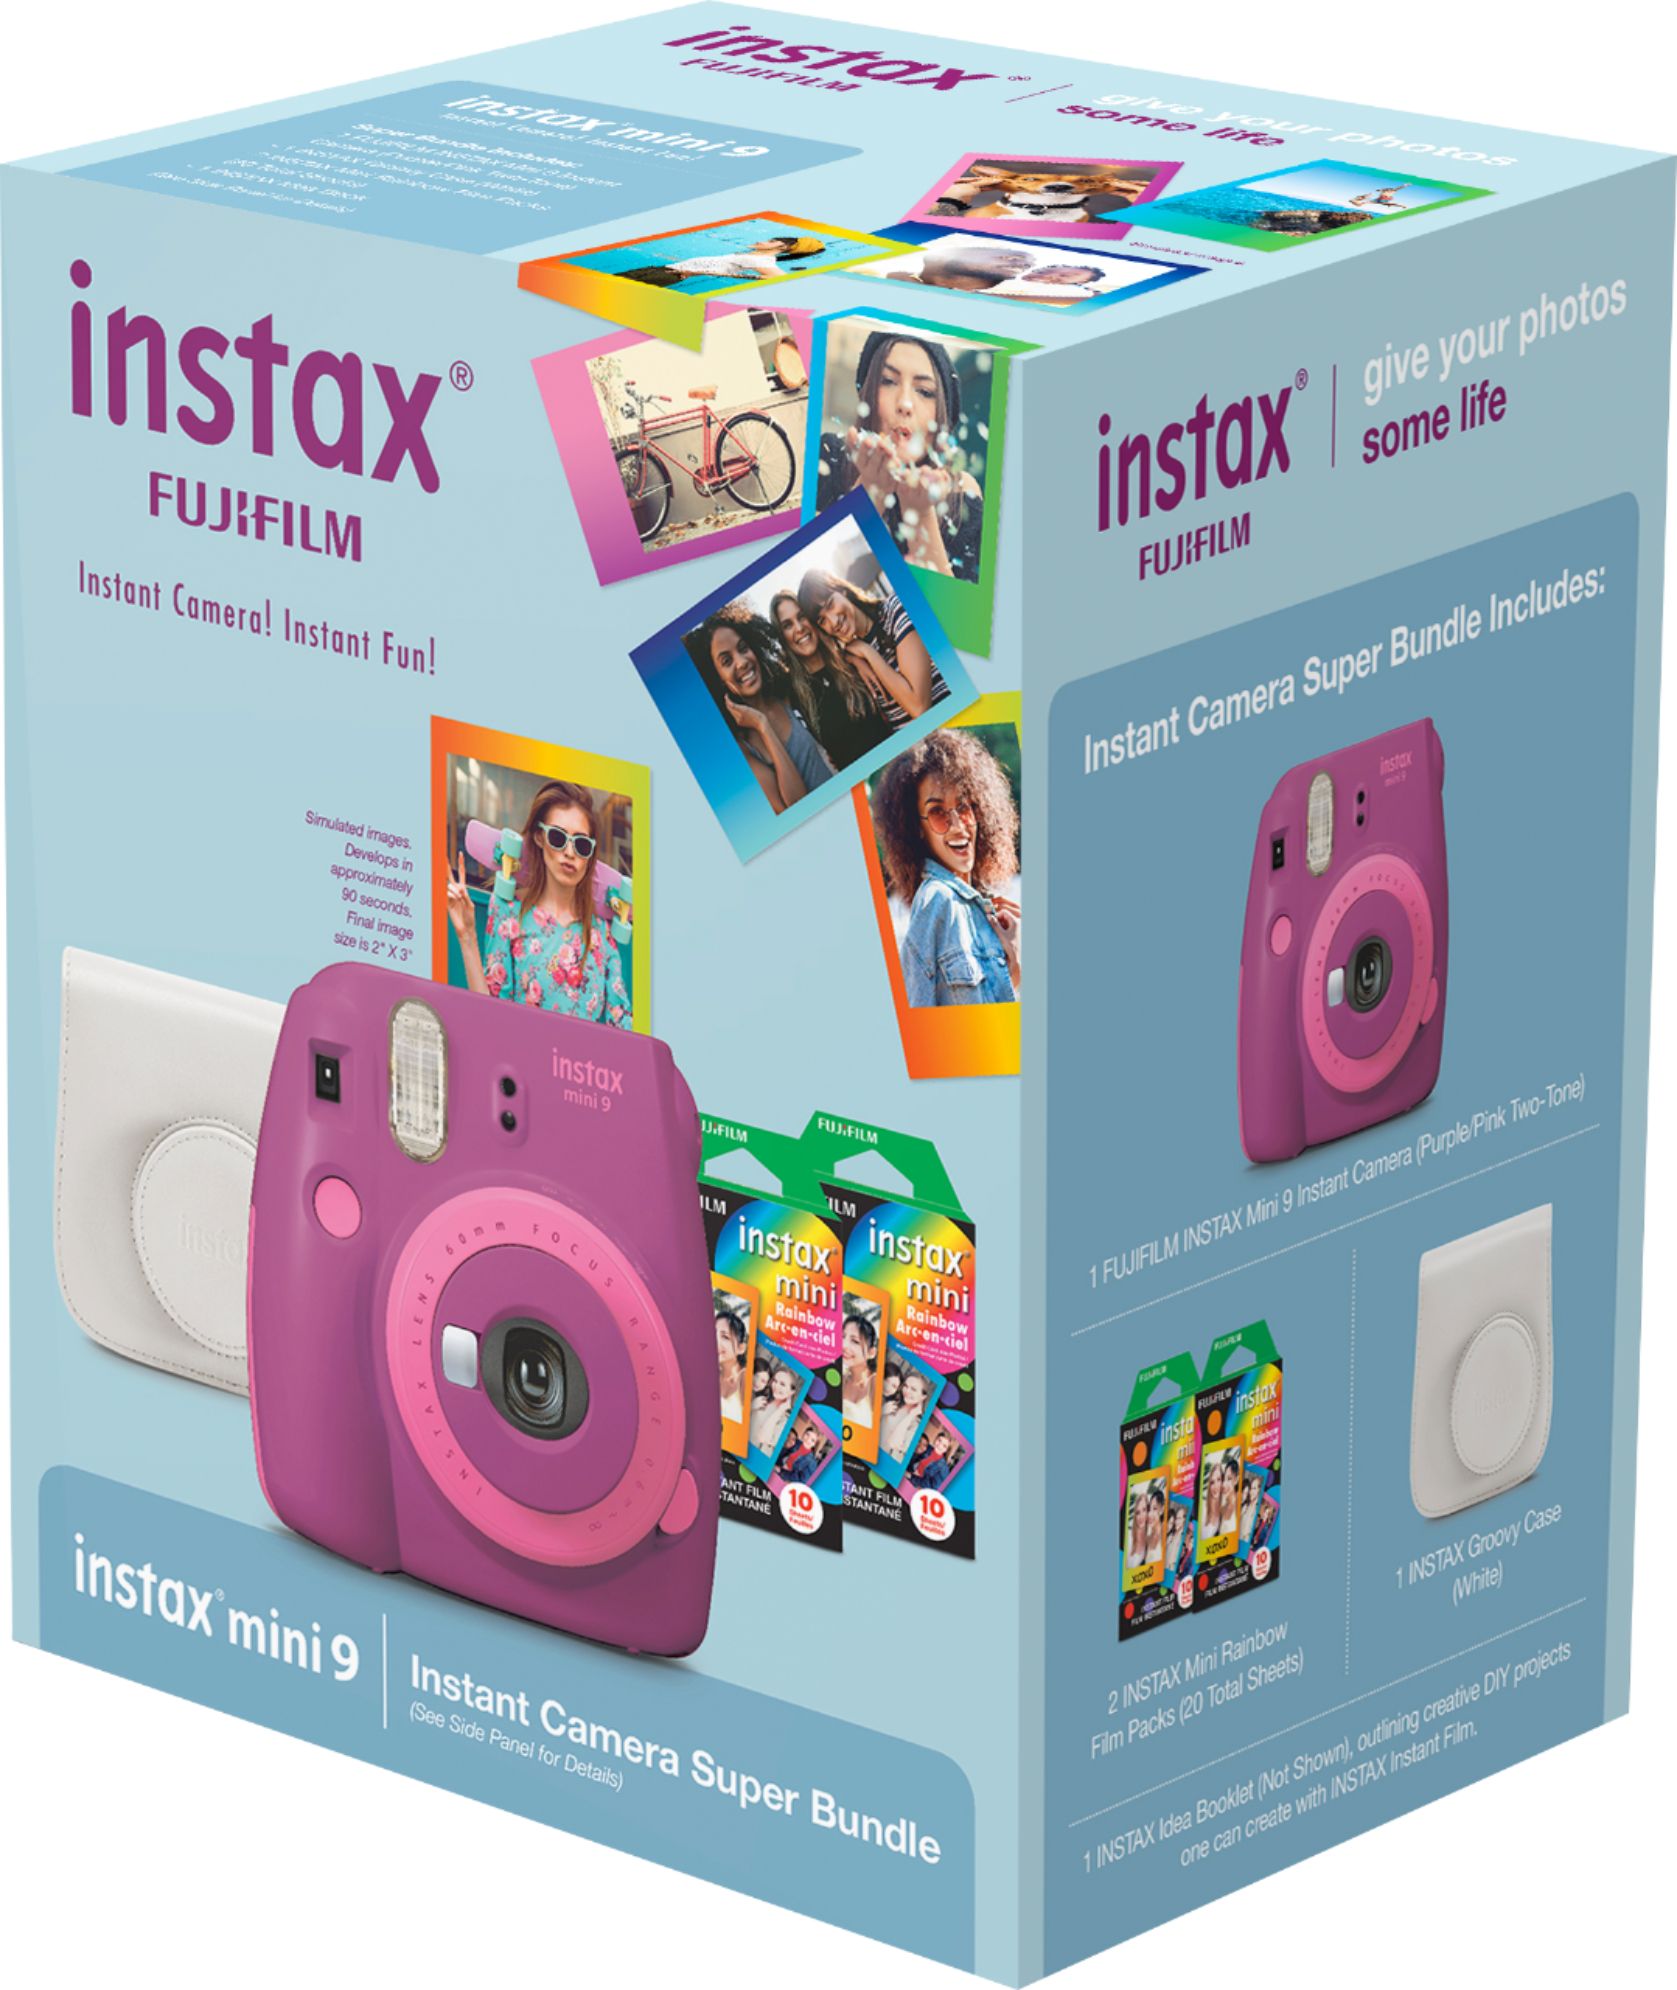 Fujifilm instax mini 9 Instant Film Camera Living Coral/Papaya 16644389 -  Best Buy